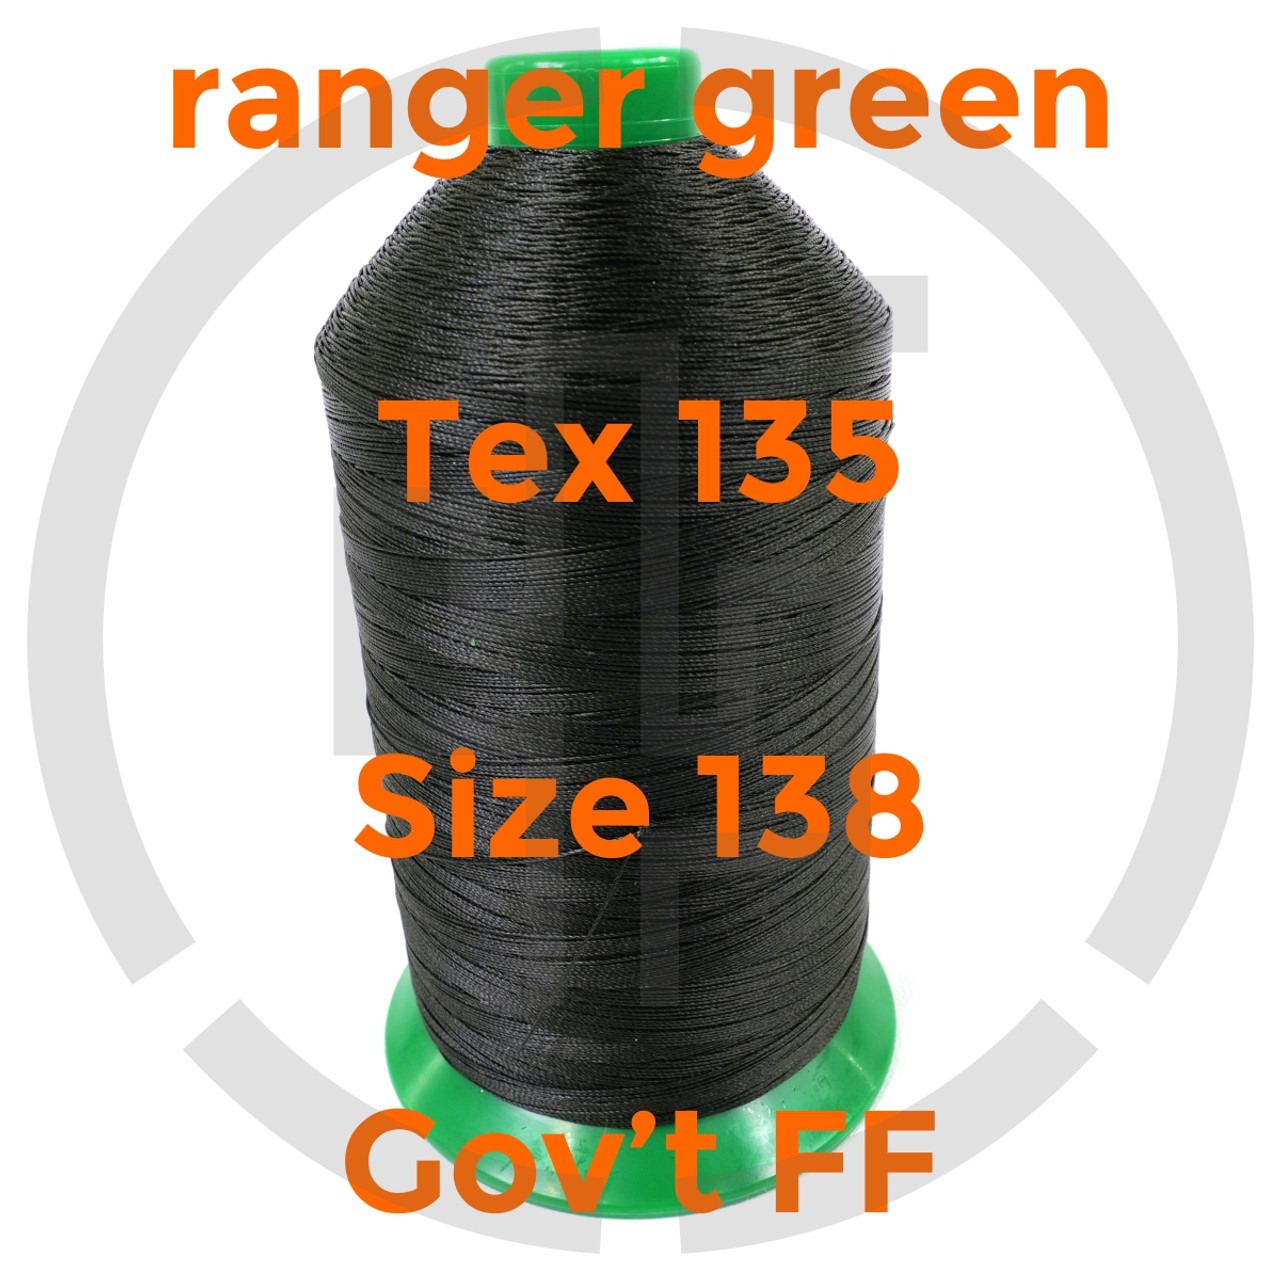 Fil-Tec 16oz Tex 135 Size 138 Gov FF Berry Compliant milspec thread  A-A-59826A bonded (Type II) nylon thread ranger green whiskey two four